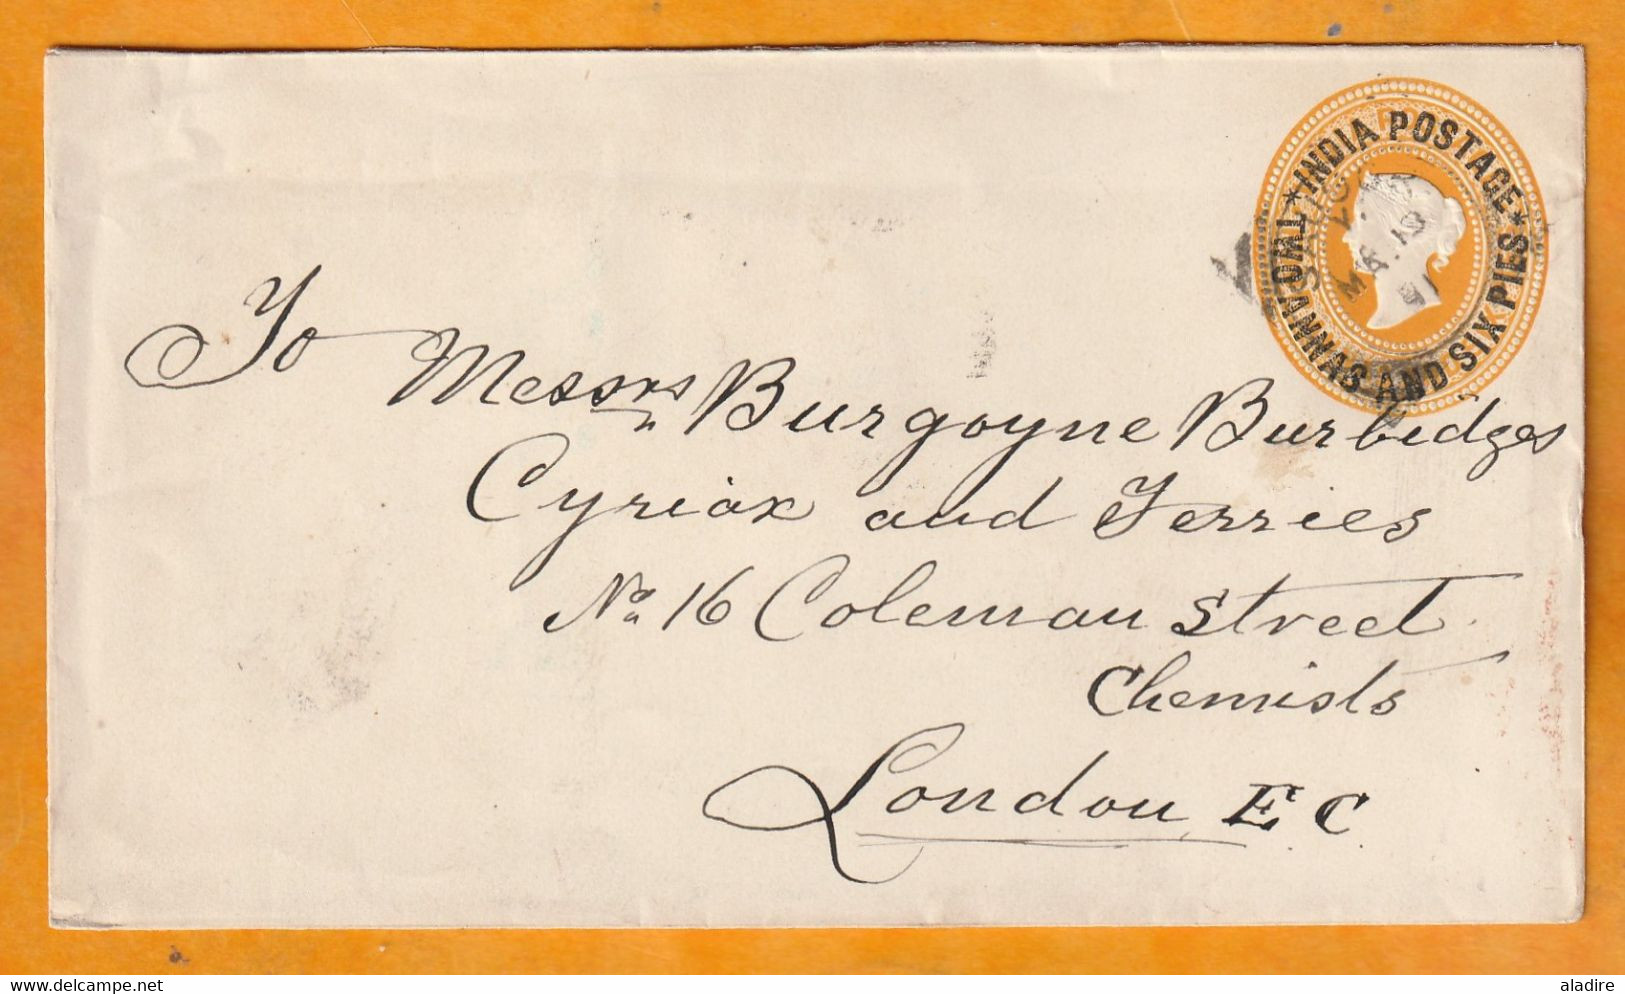 1891 - QV - Entier Postal Enveloppe 2 Annas 6 Pence De Bombay Mumbai, Inde, GB Vers London, GB - 1882-1901 Impero